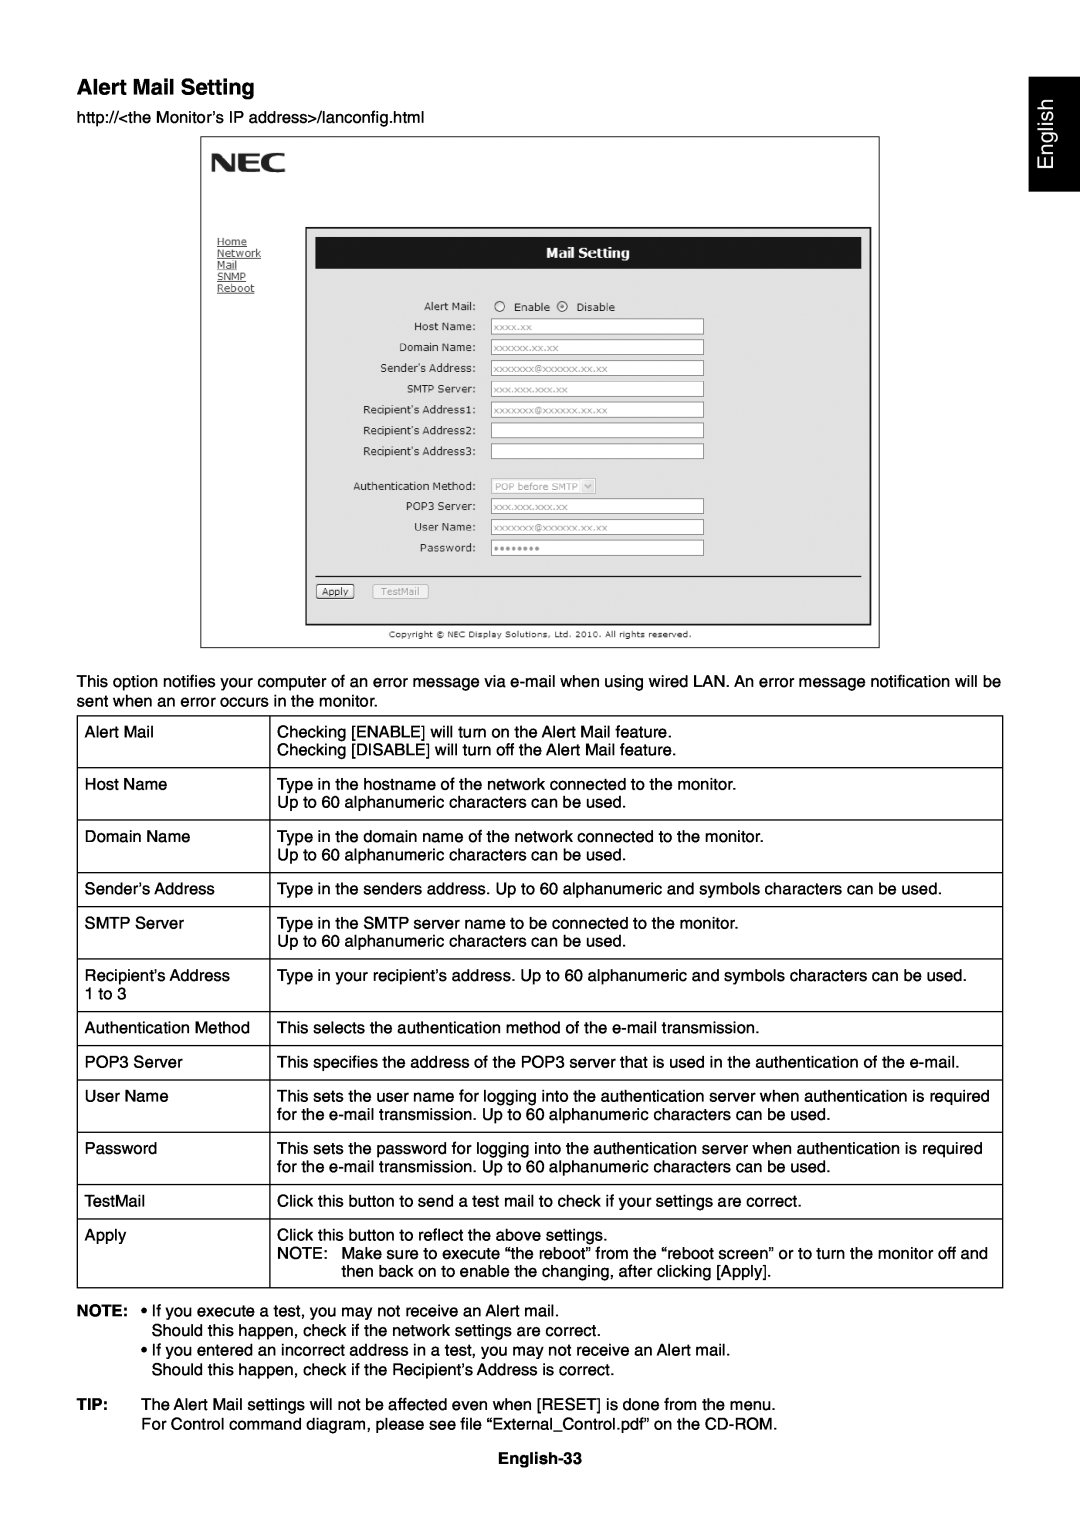 NEC MULTISYNC X462HB user manual Alert Mail Setting, English-33 